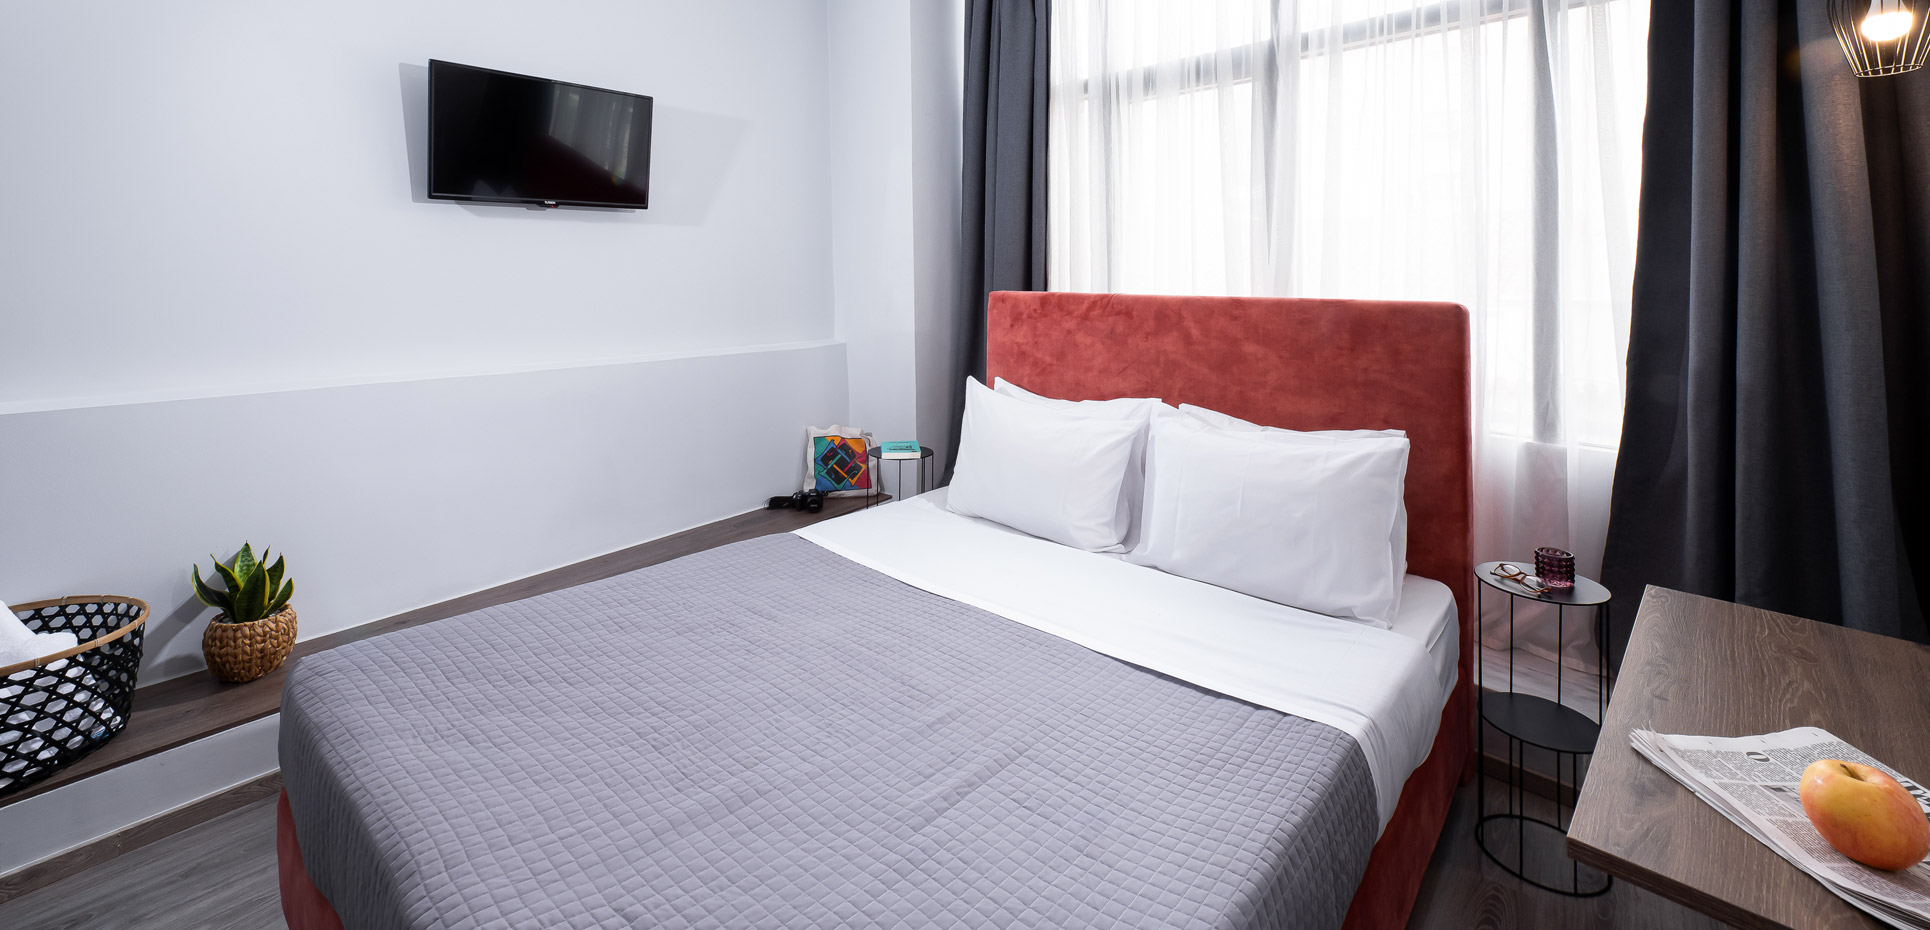 Enattica Monastiraki Living, bedroom with double bed